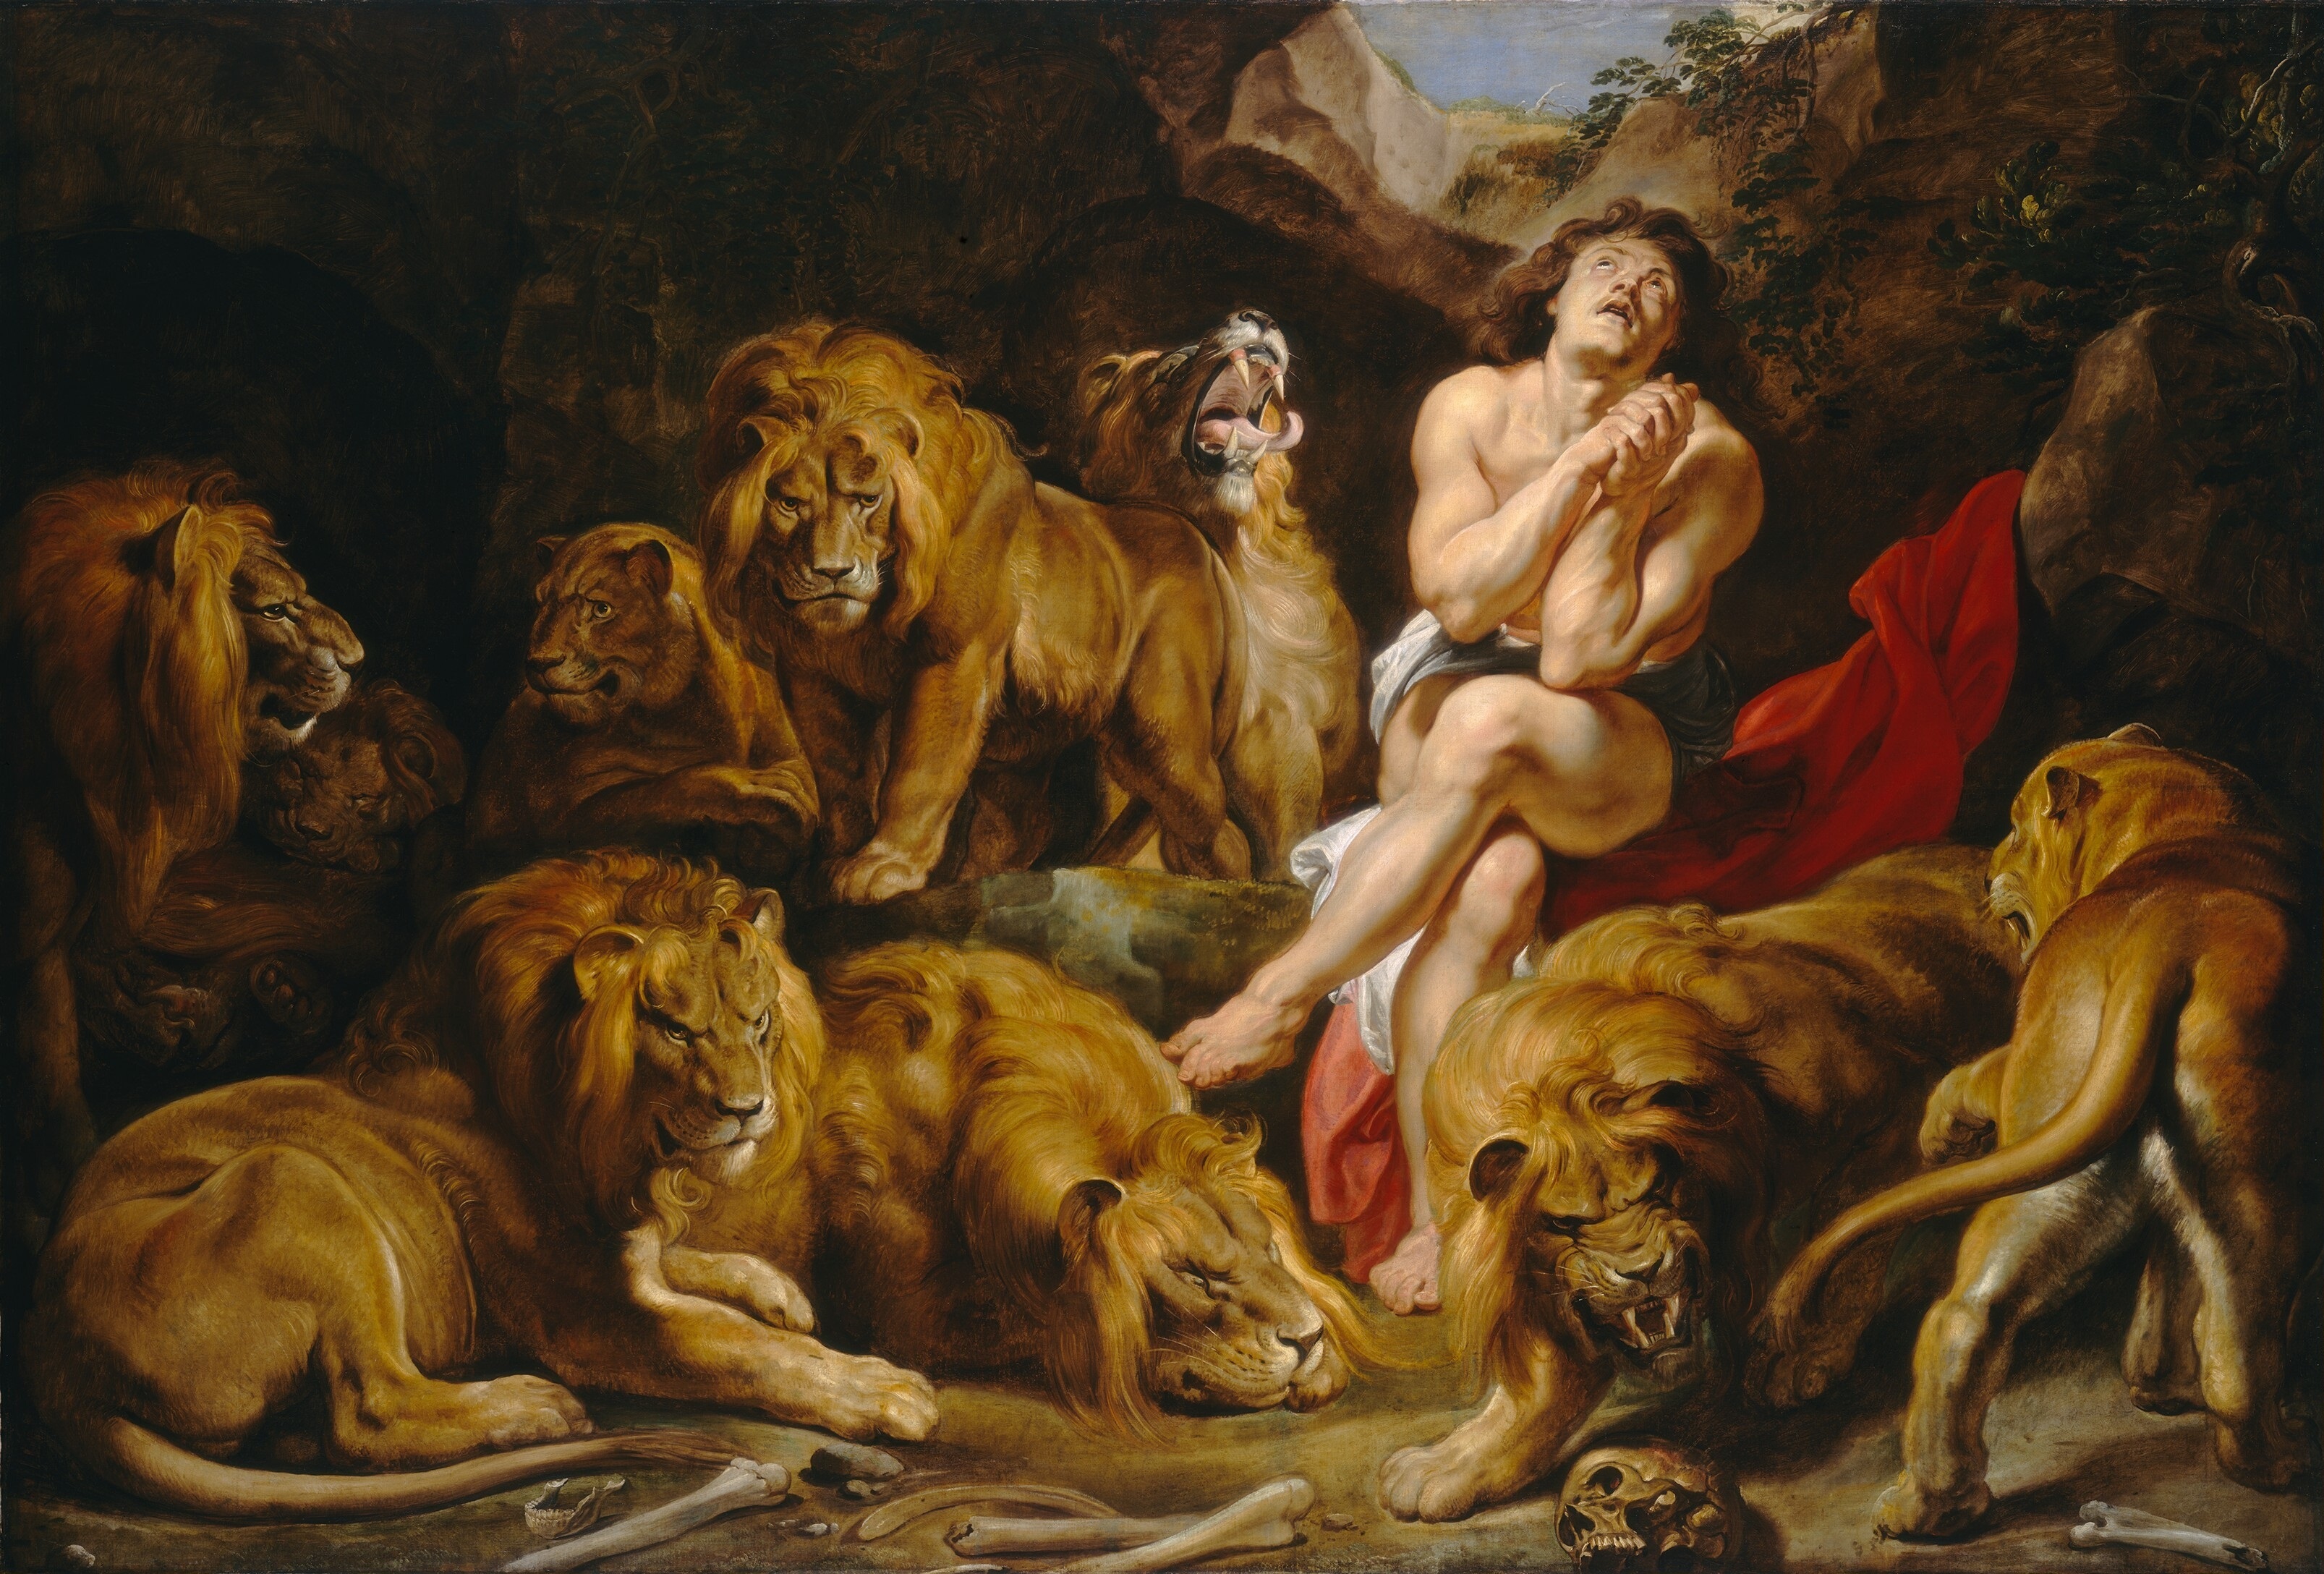 Daniel in the Lions' Den by Peter Paul Rubens - c. 1614/1616 - 224.2 x 330.5 cm National Gallery of Art